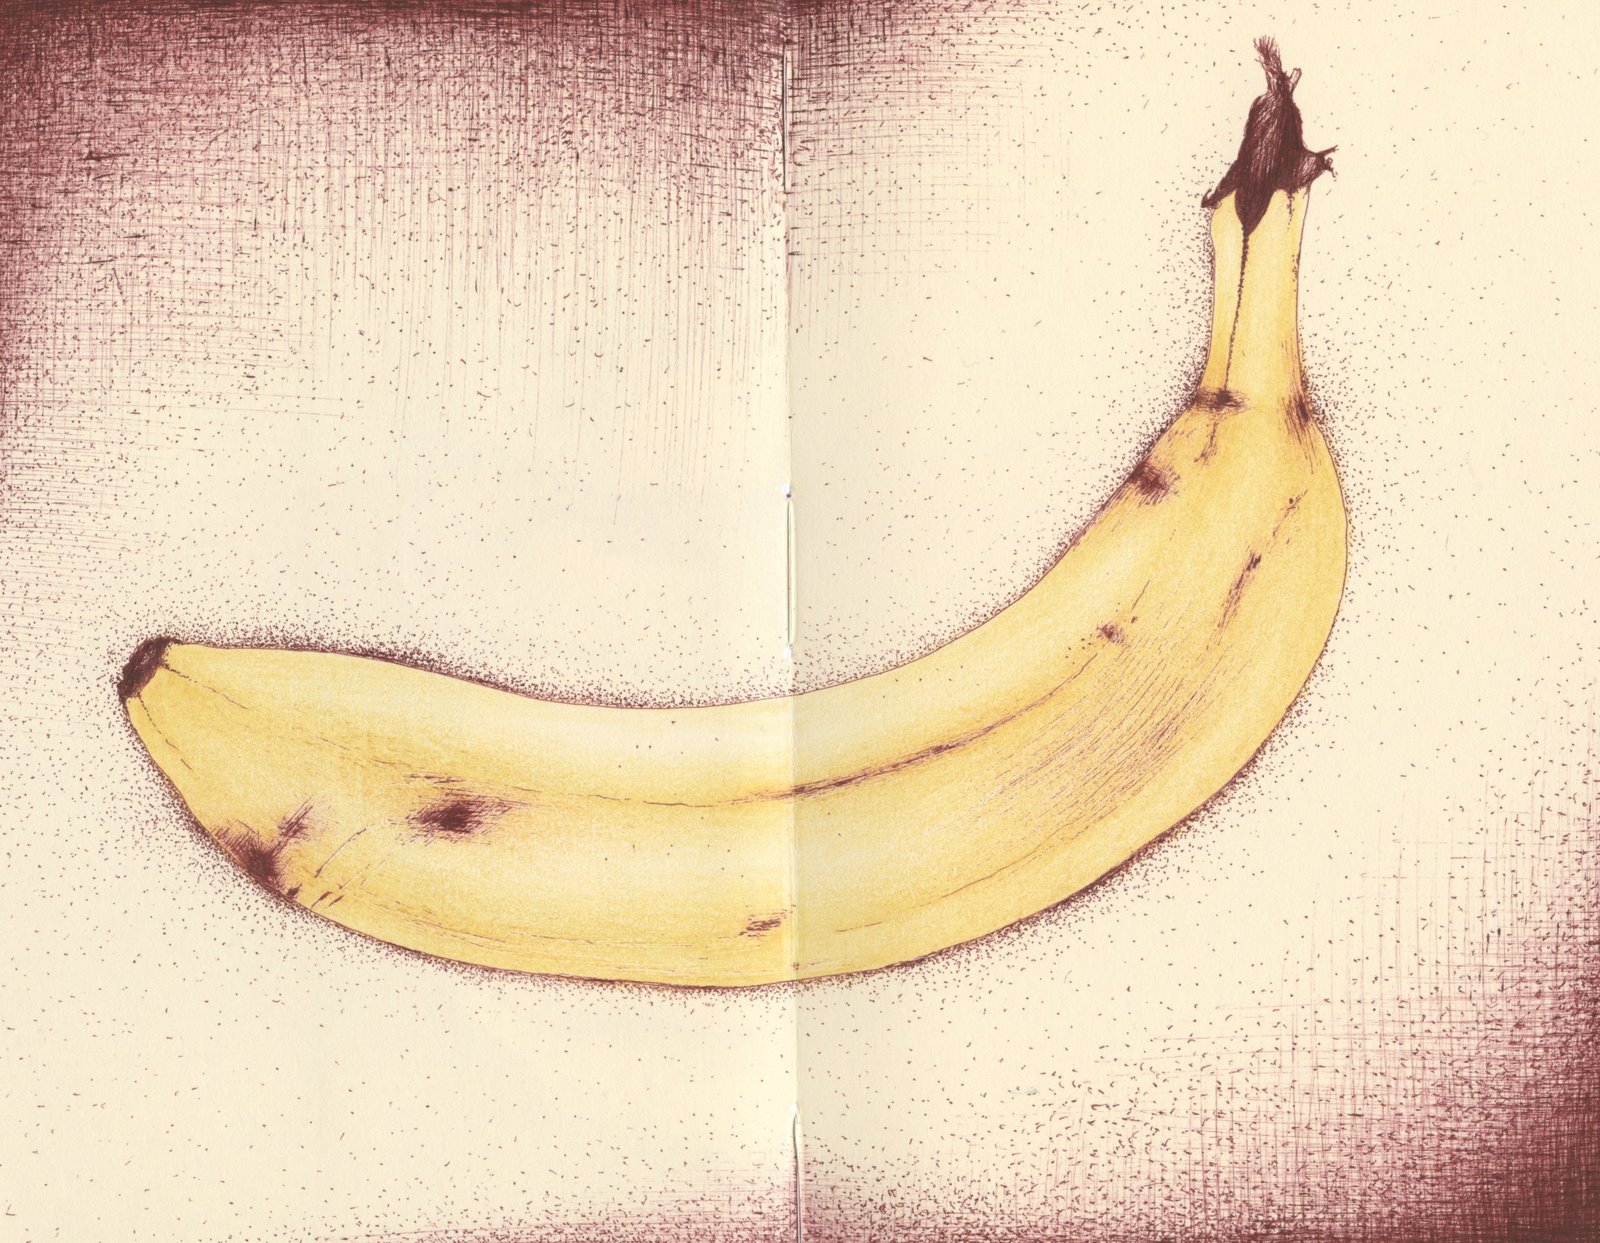 [banana1.jpg]